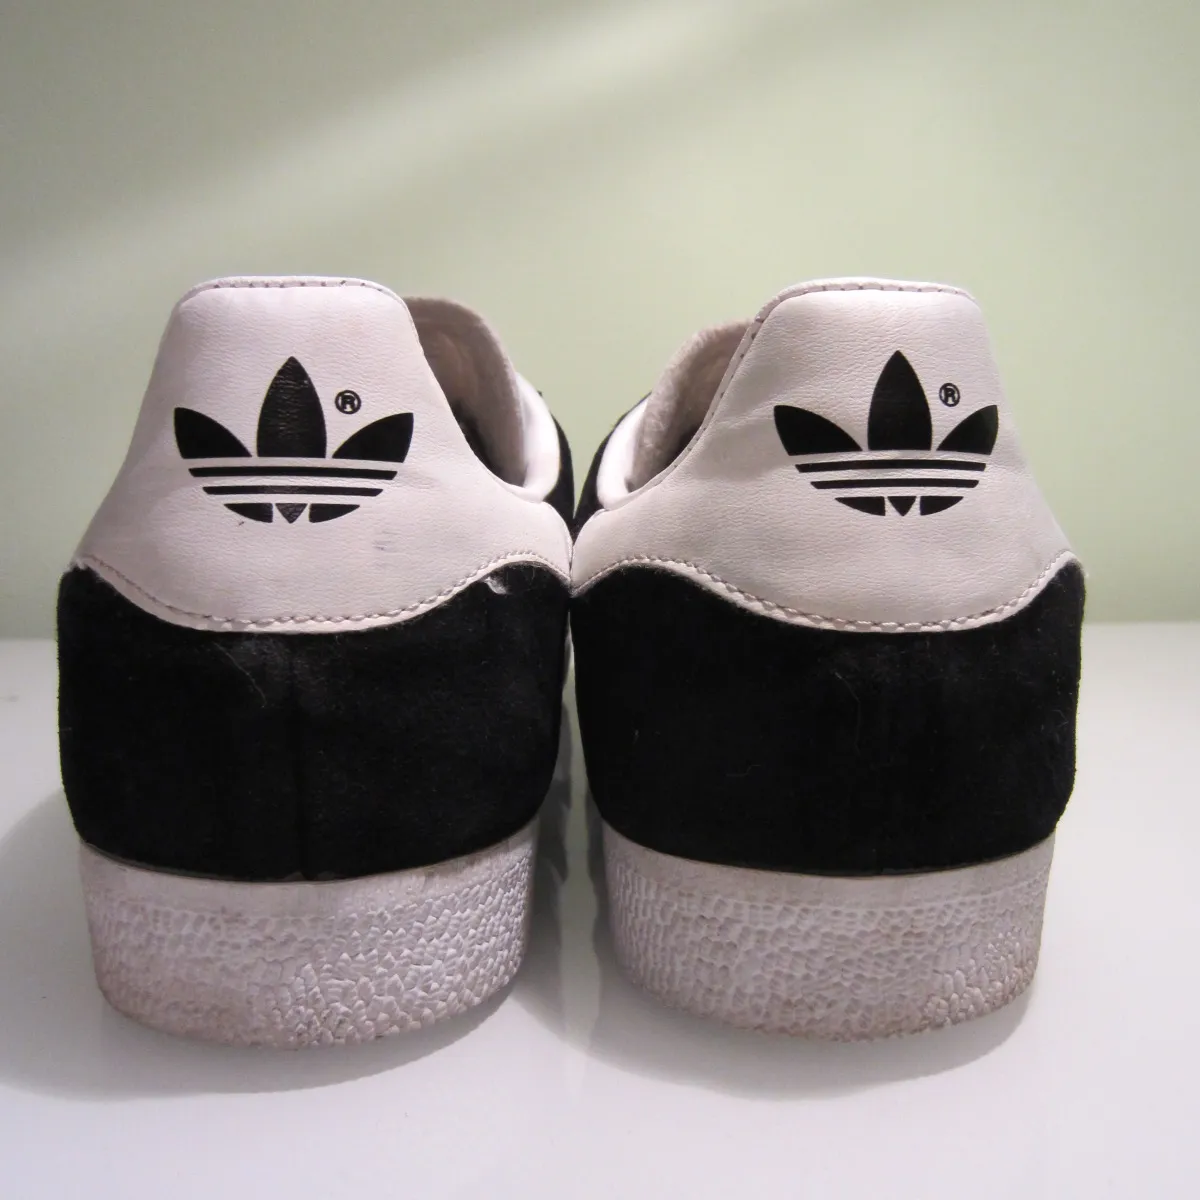 Adidas Men's Gazelle Shoes/Sneakers - Black/White - Size 10.5 photo 3